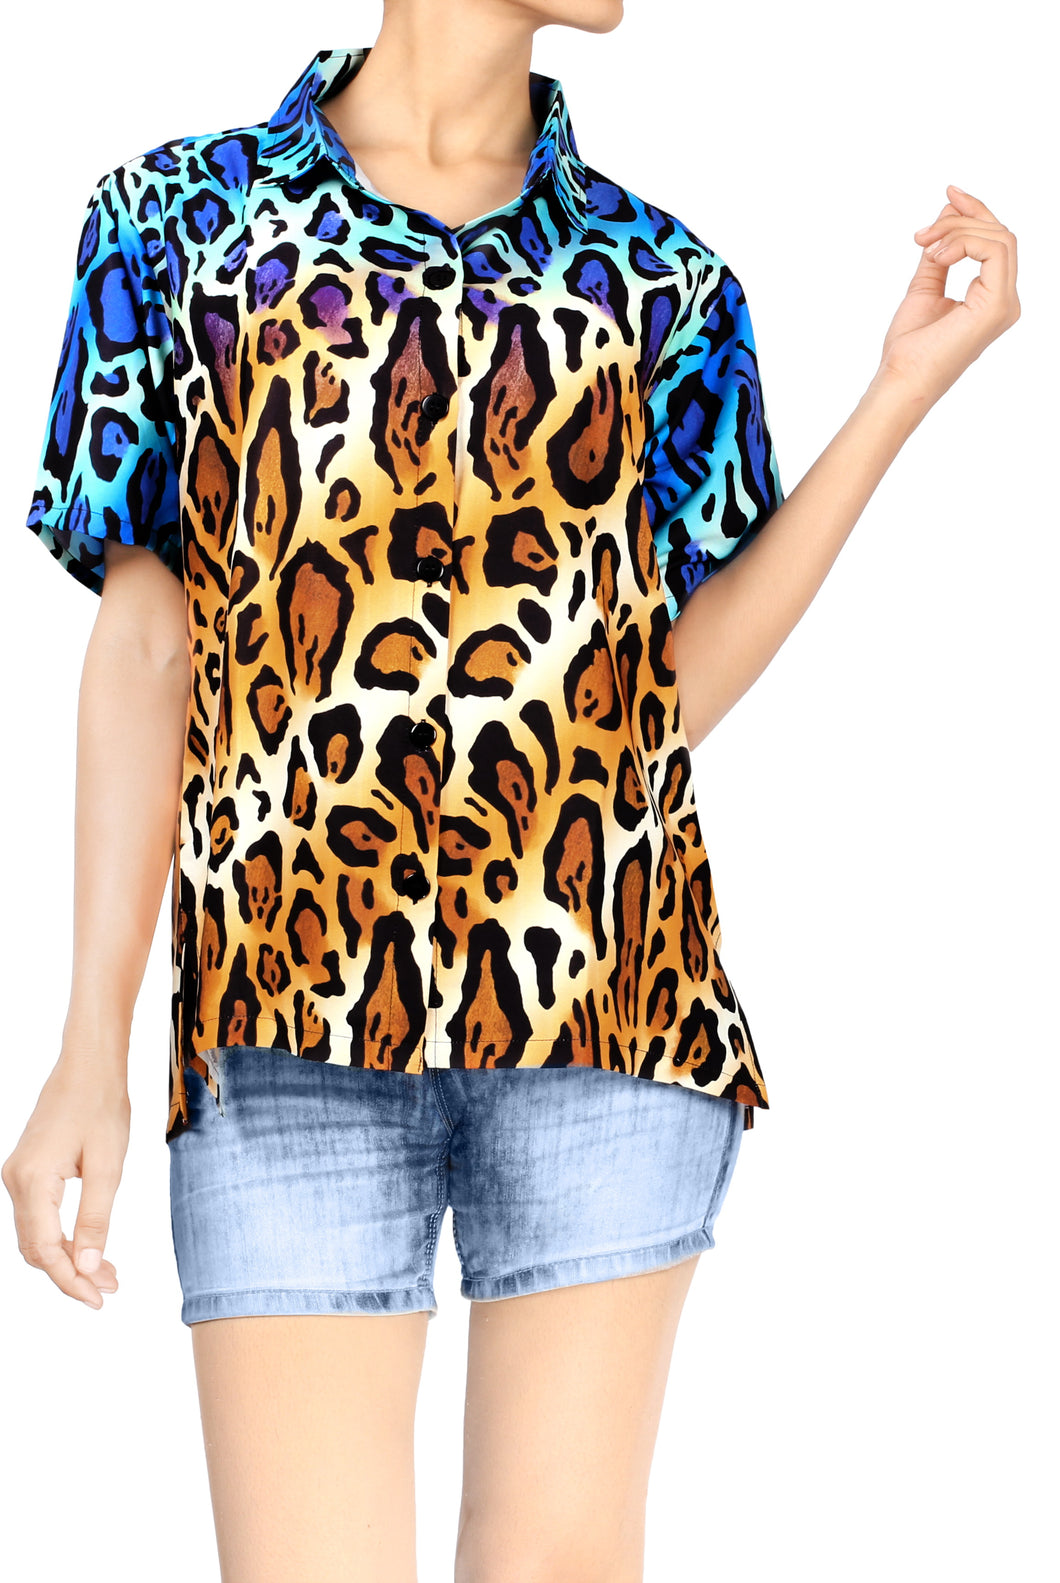 la-leela-womens-animal-print-hawaiian-aloha-tropical-beach--short-sleeve-relaxed-fit-blouse-printed-shirt-multi-color